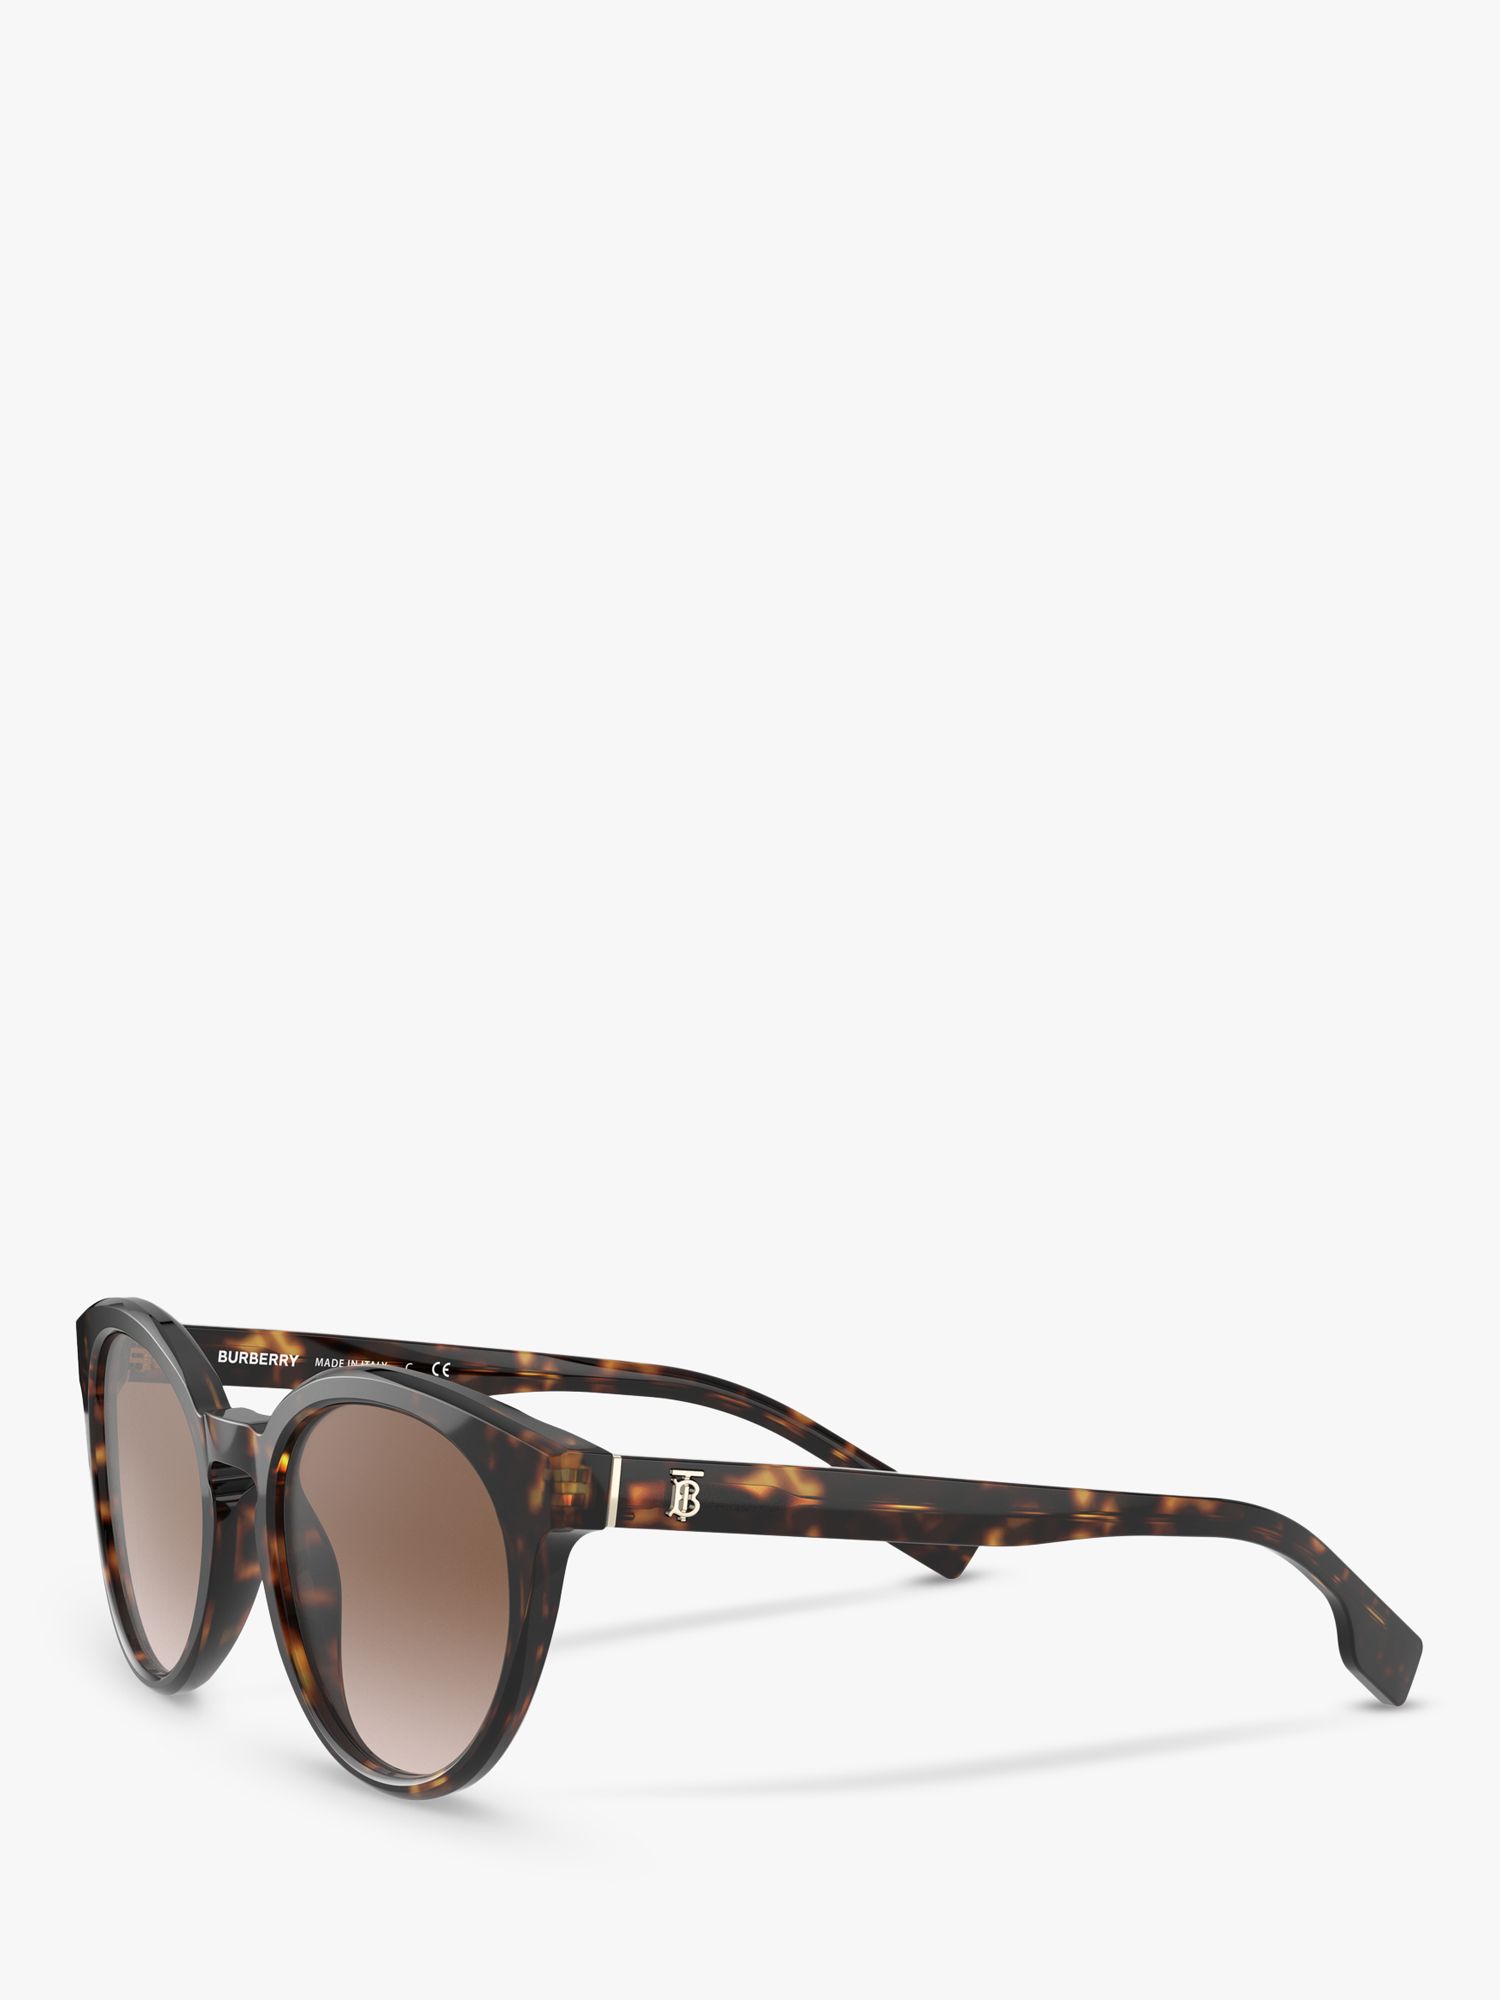 Burberry BE4326 Women's Oval Sunglasses